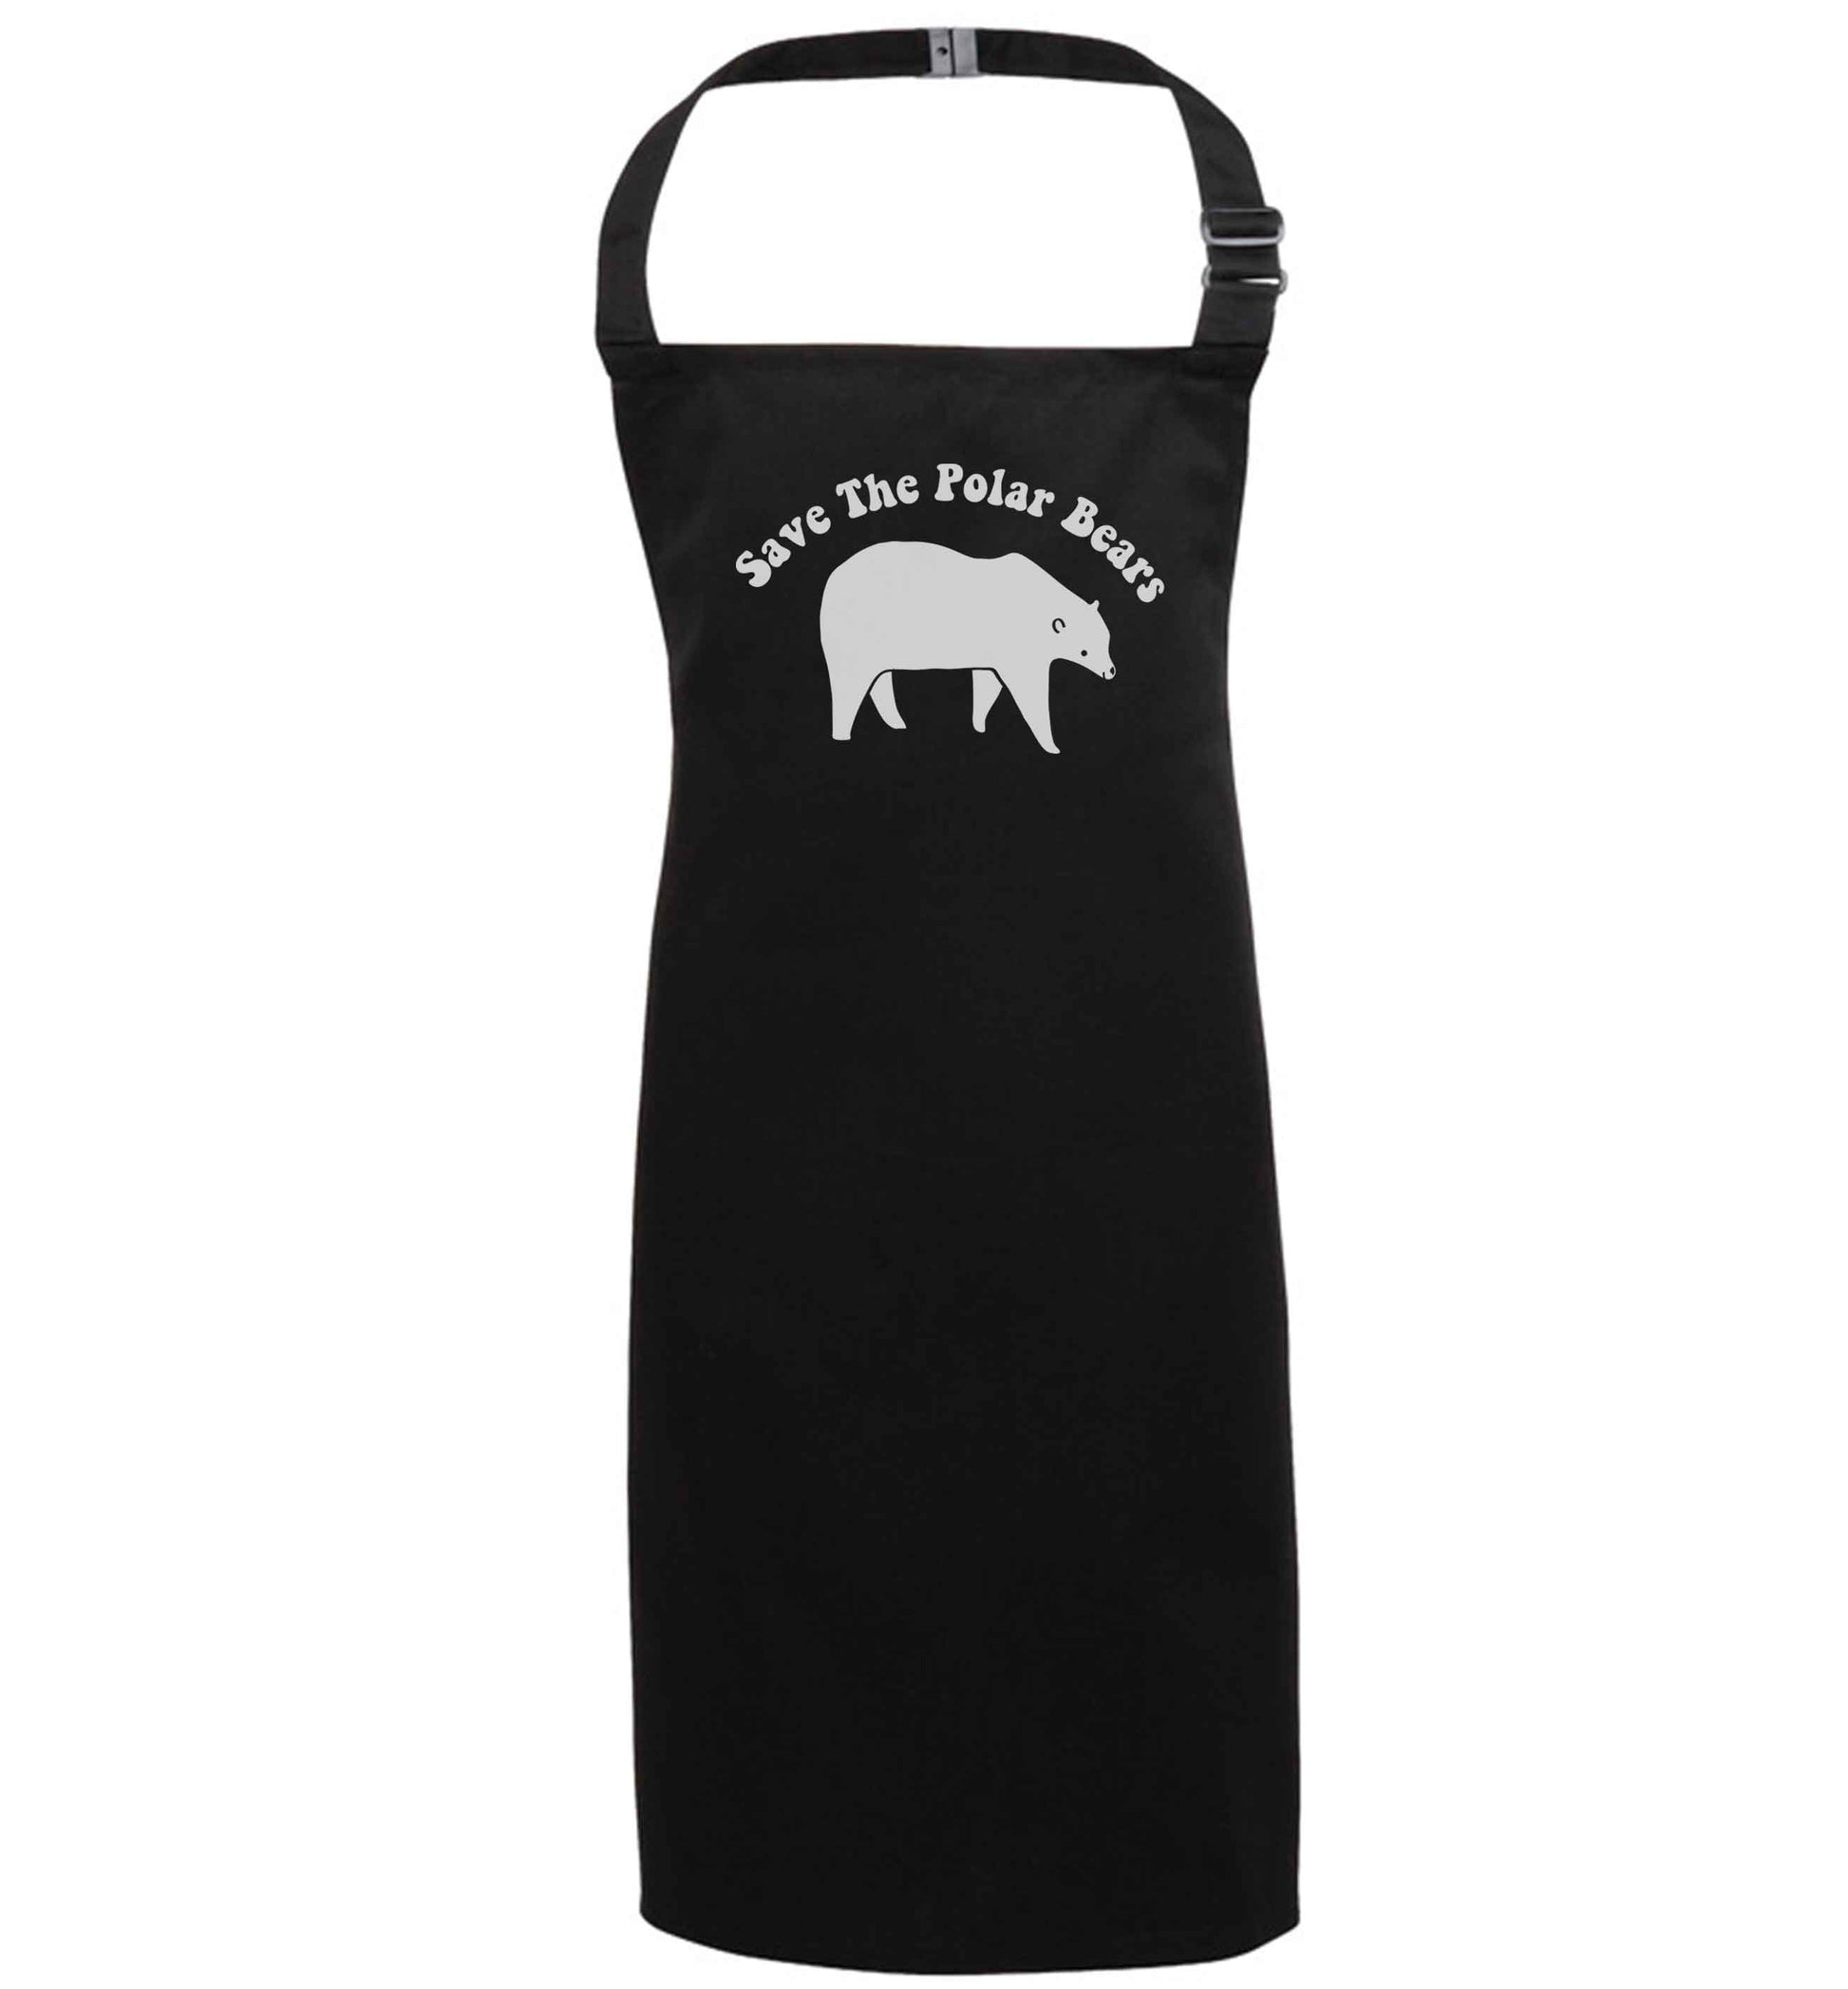 Save The Polar Bears black apron 7-10 years